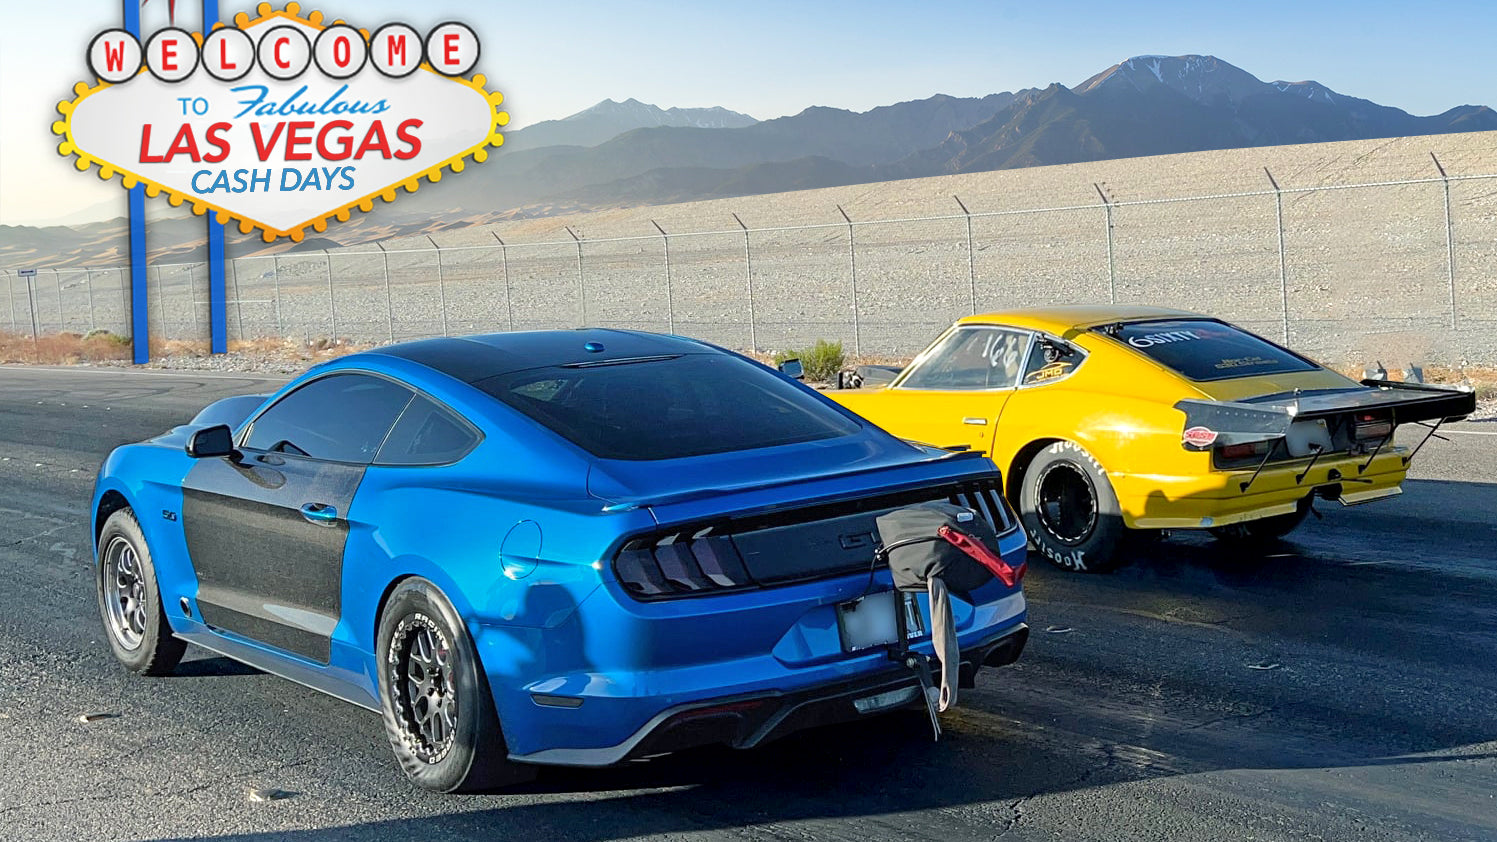 Las Vegas Street Racing (600-1000hp street cars)